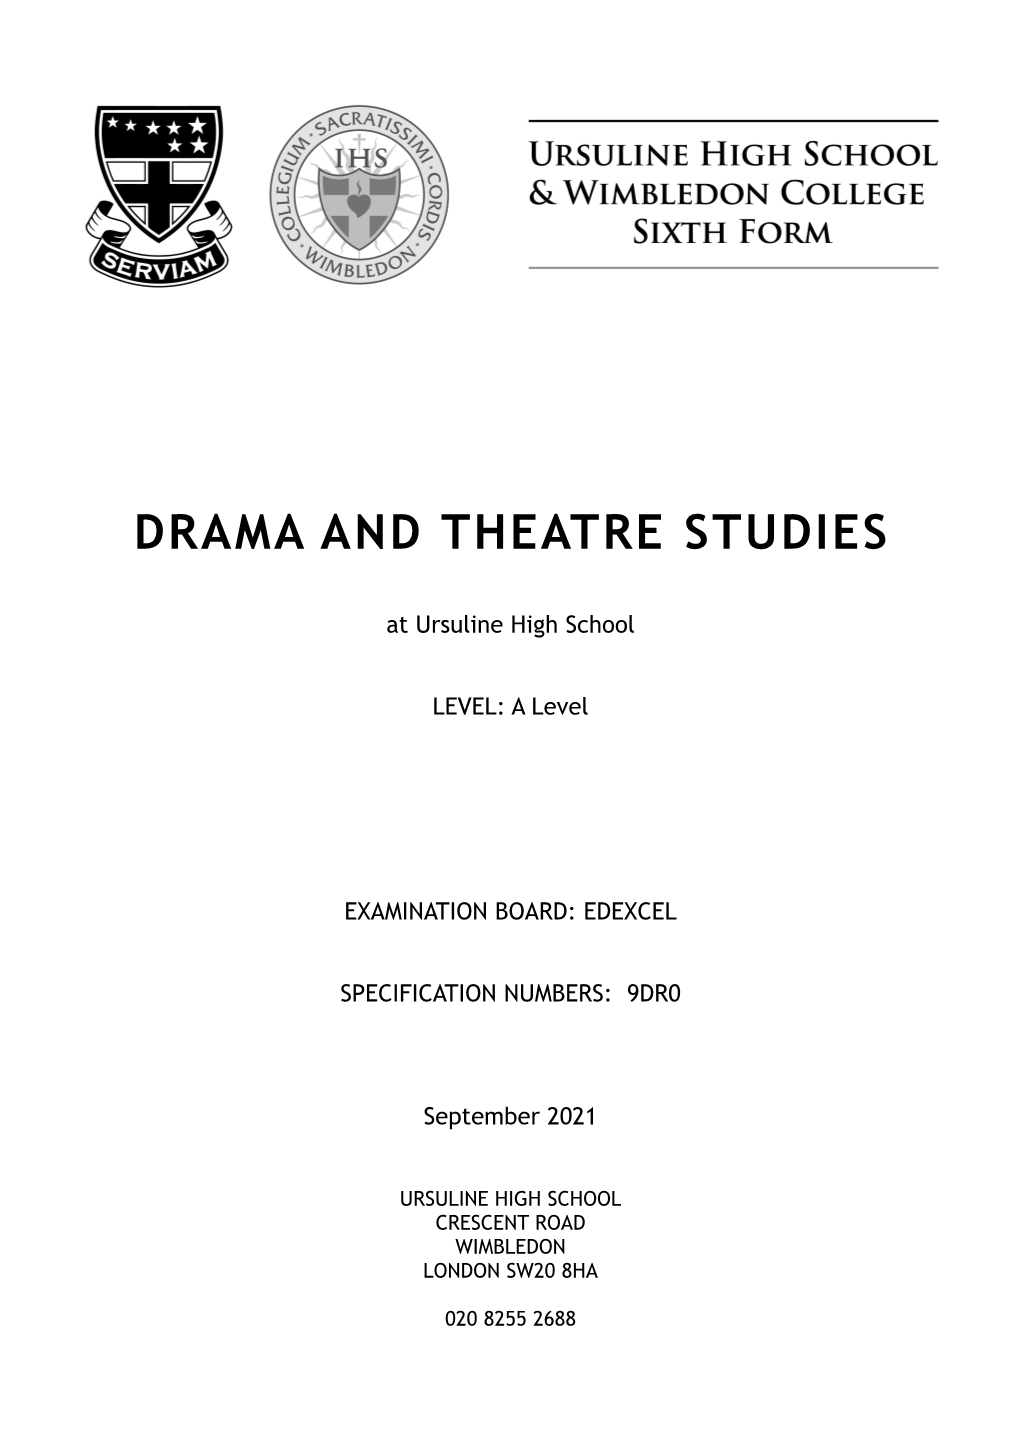 Drama and Theatre Studies 2021